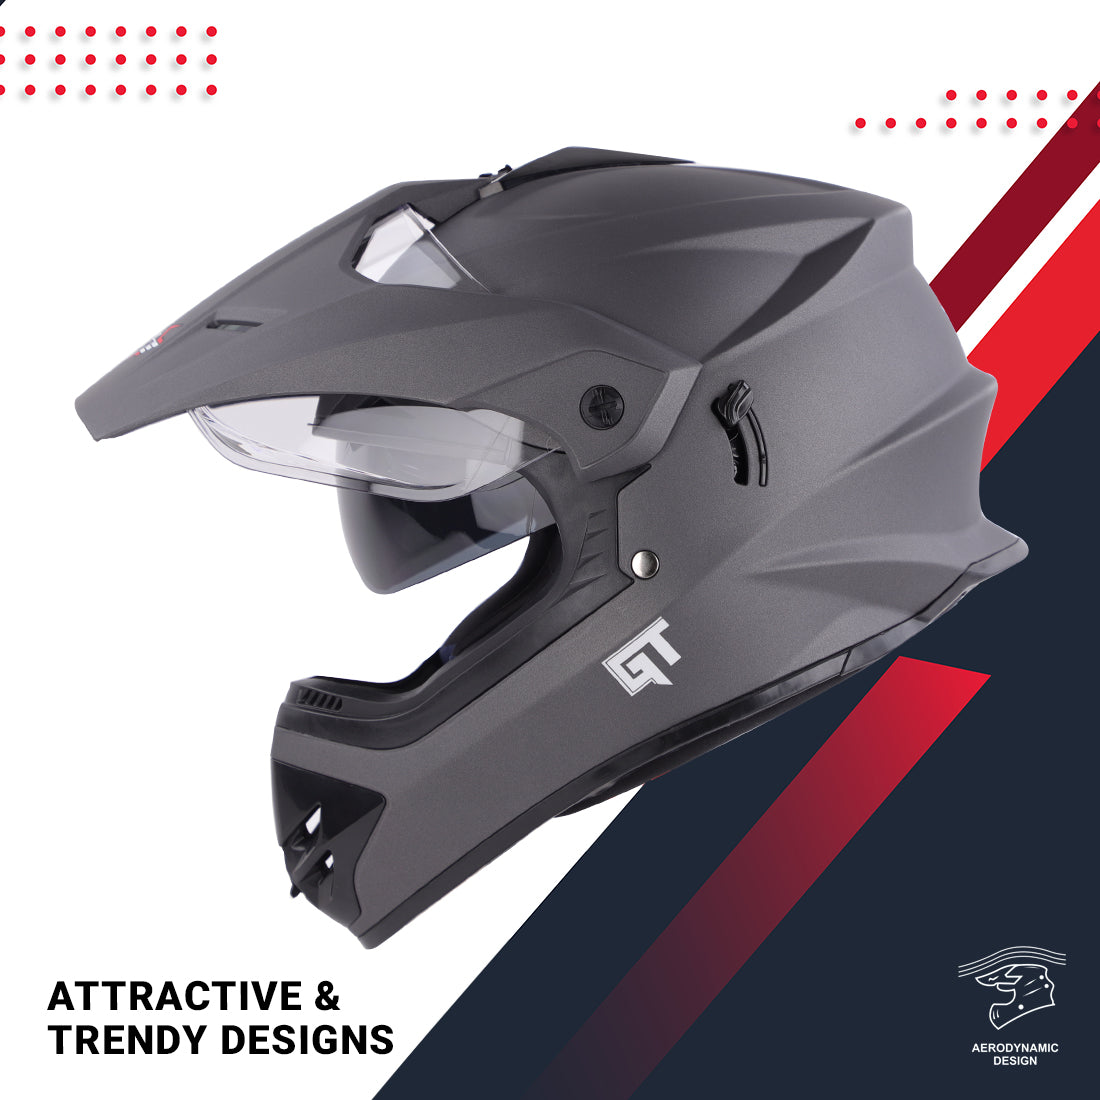 Steelbird GT Off Road ISI Certified Motocross Double Visor Full Face Helmet Outer Clear Visor and Inner Smoke Sun Shield (Matt Axis Grey)